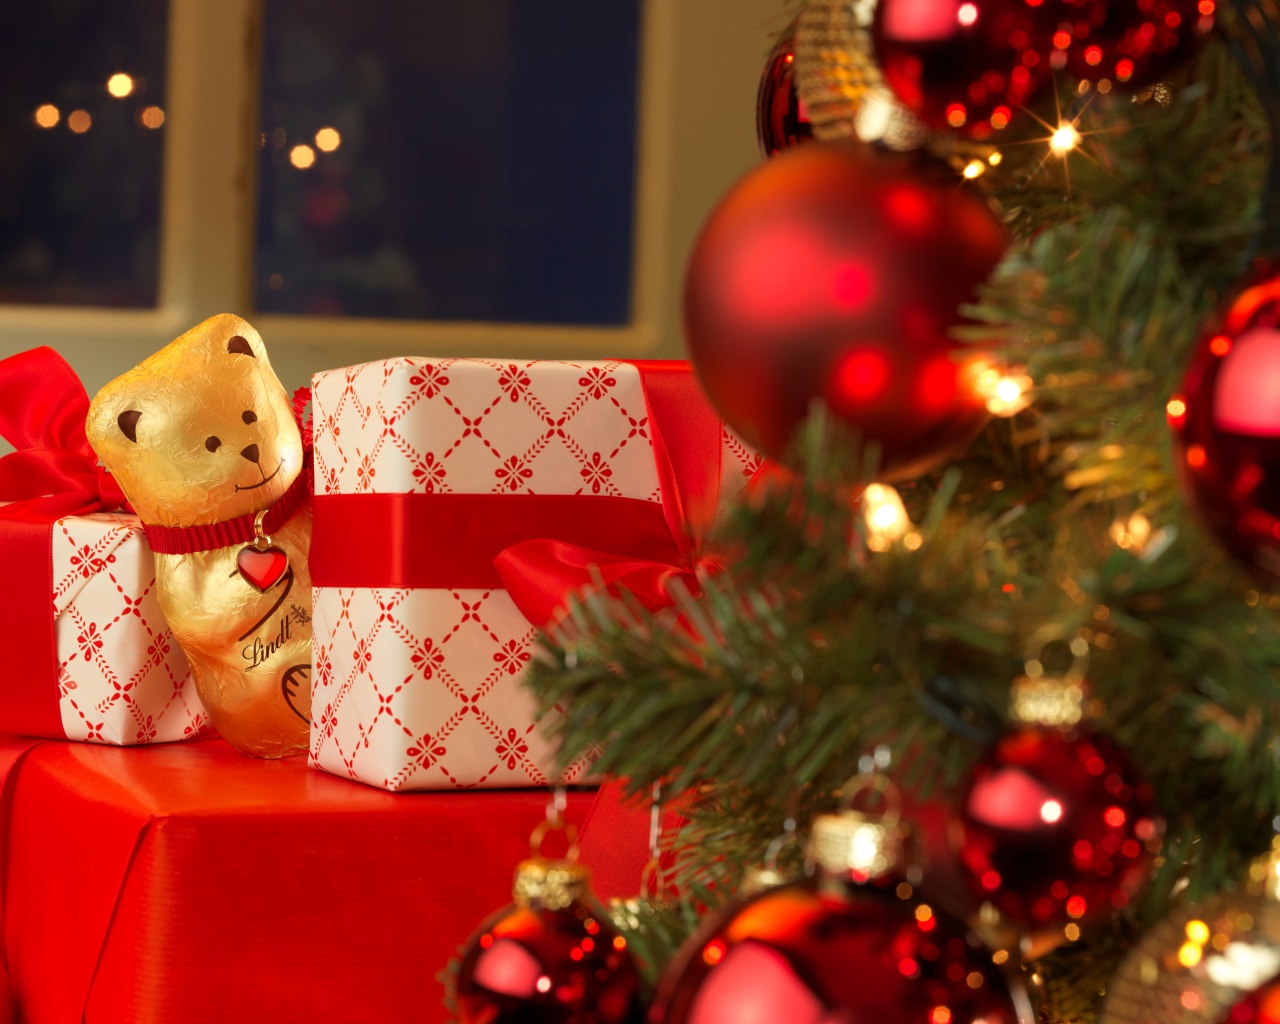 Teddy Bear Gifts And Christmas Tree